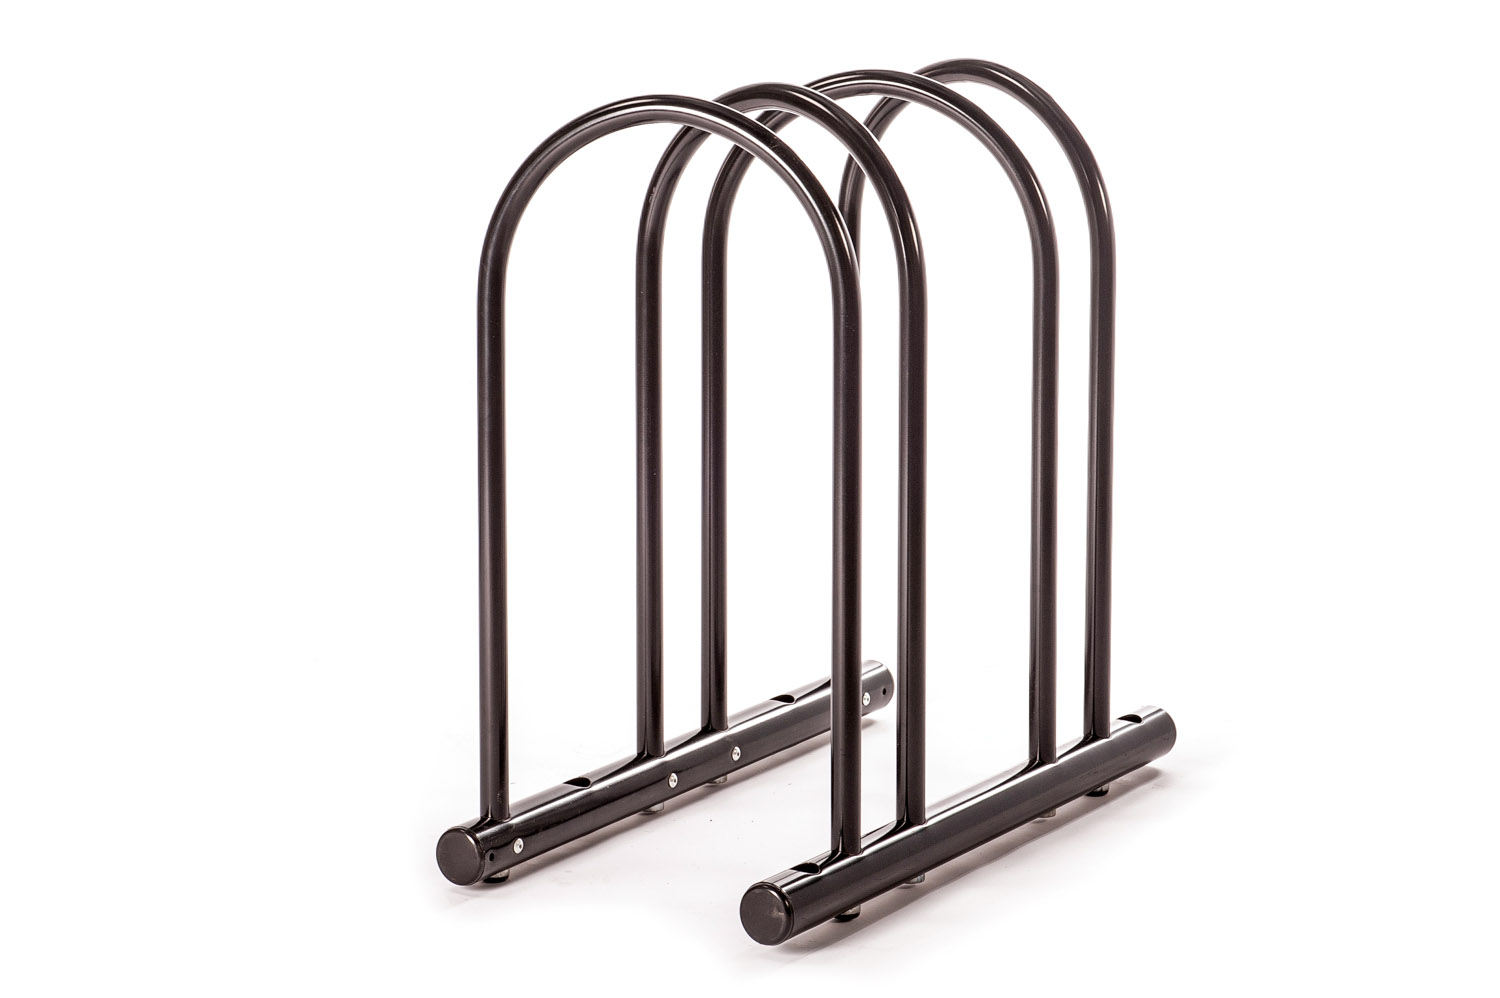 CP High-Density bike rack – Velo Rack